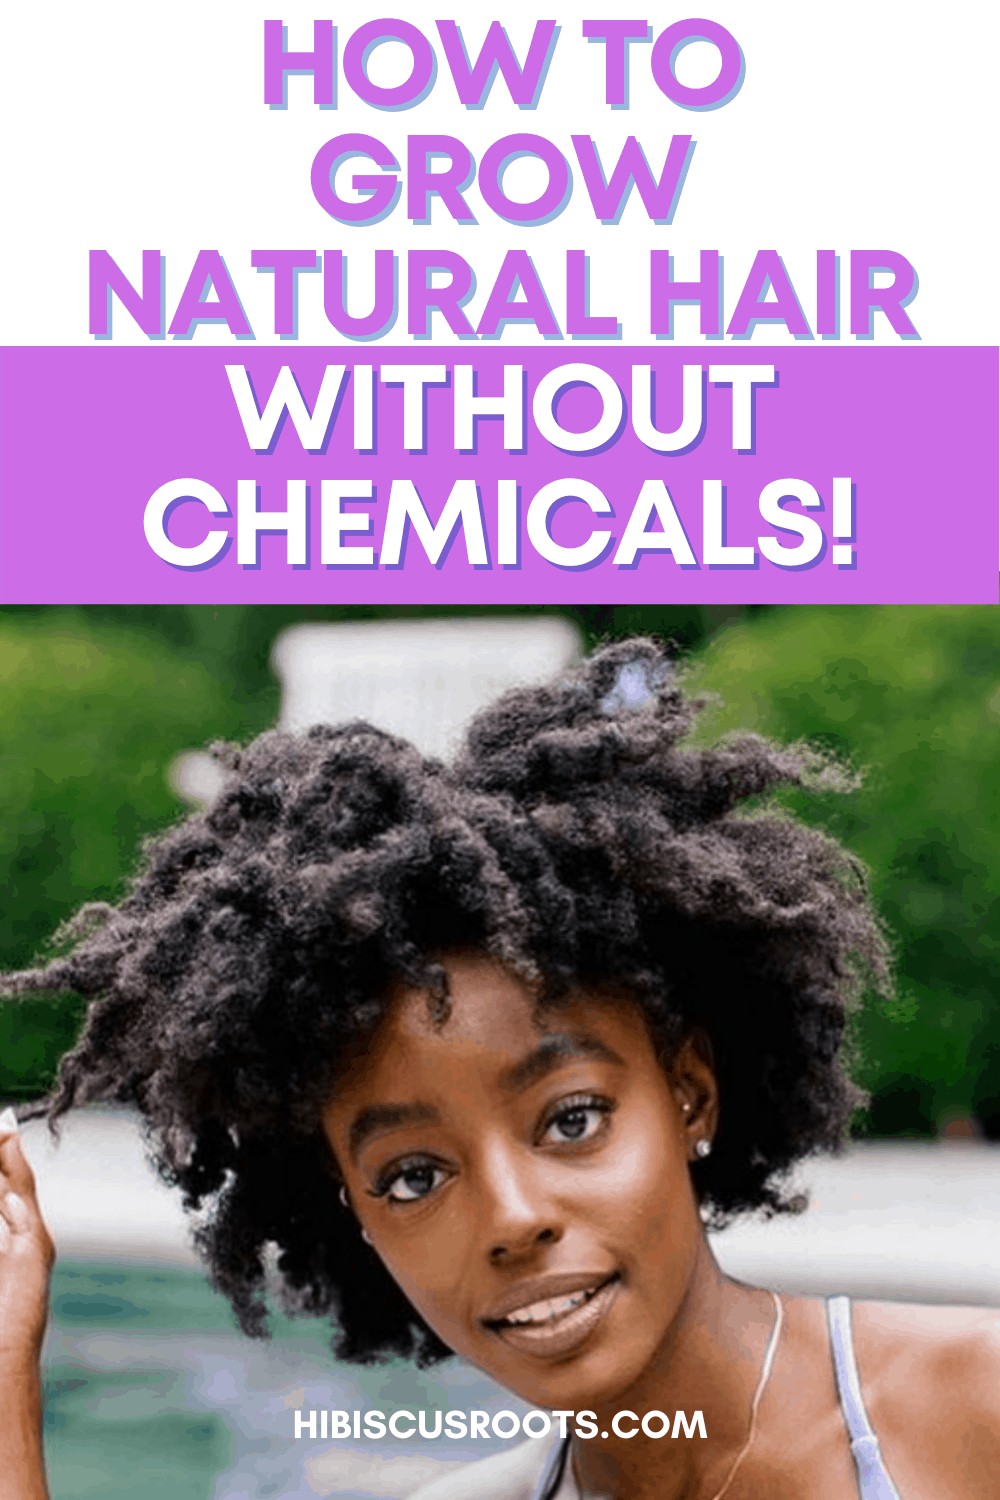 11  All-Natural Ways to Grow Natural Hair!